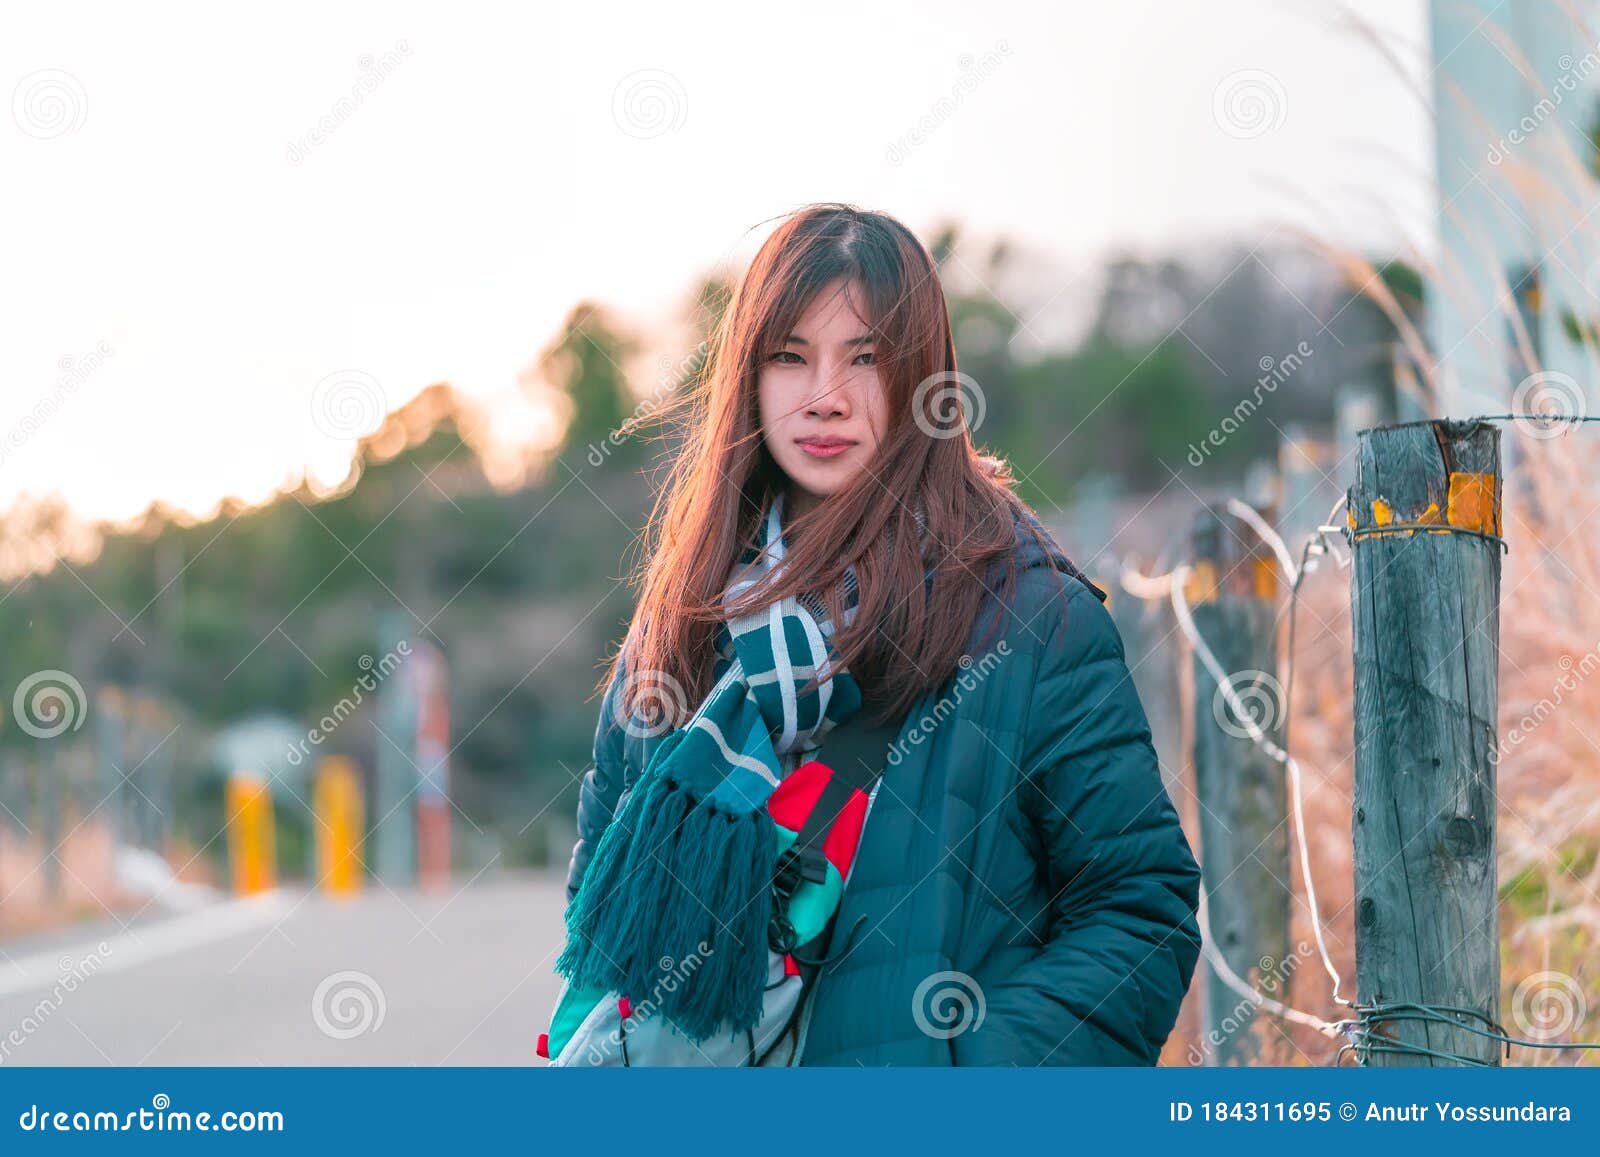 https://thumbs.dreamstime.com/z/woman-portrait-winter-fashion-clothing-rural-street-japan-beautiful-woman-portrait-winter-fashion-clothing-184311695.jpg